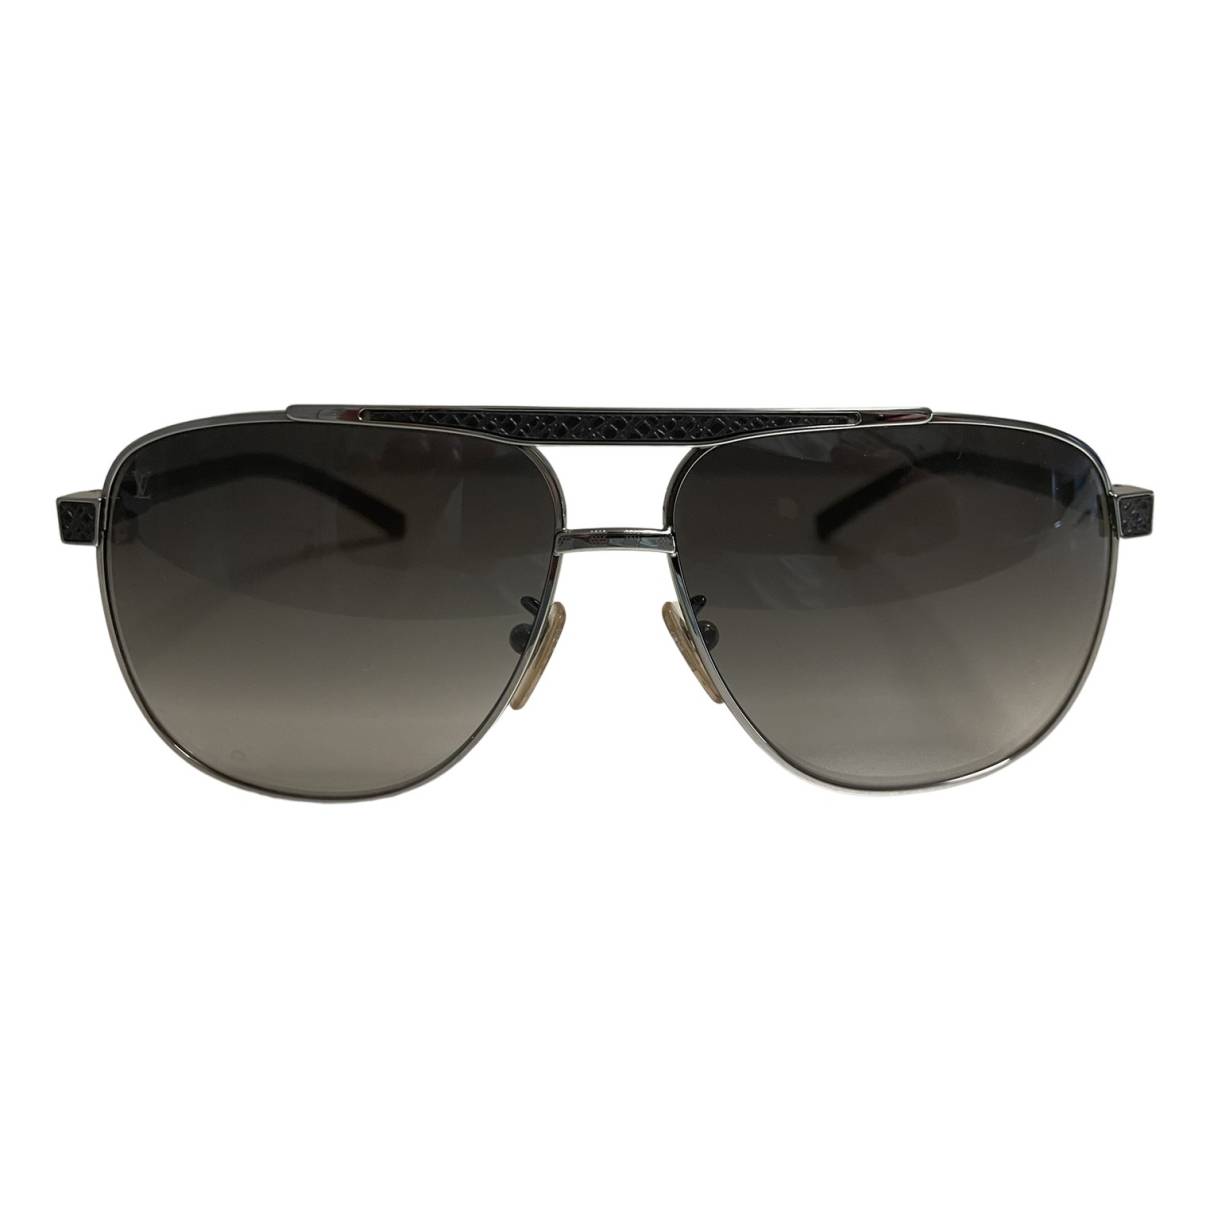 Sunglasses Louis Vuitton Silver in Metal - 34284436